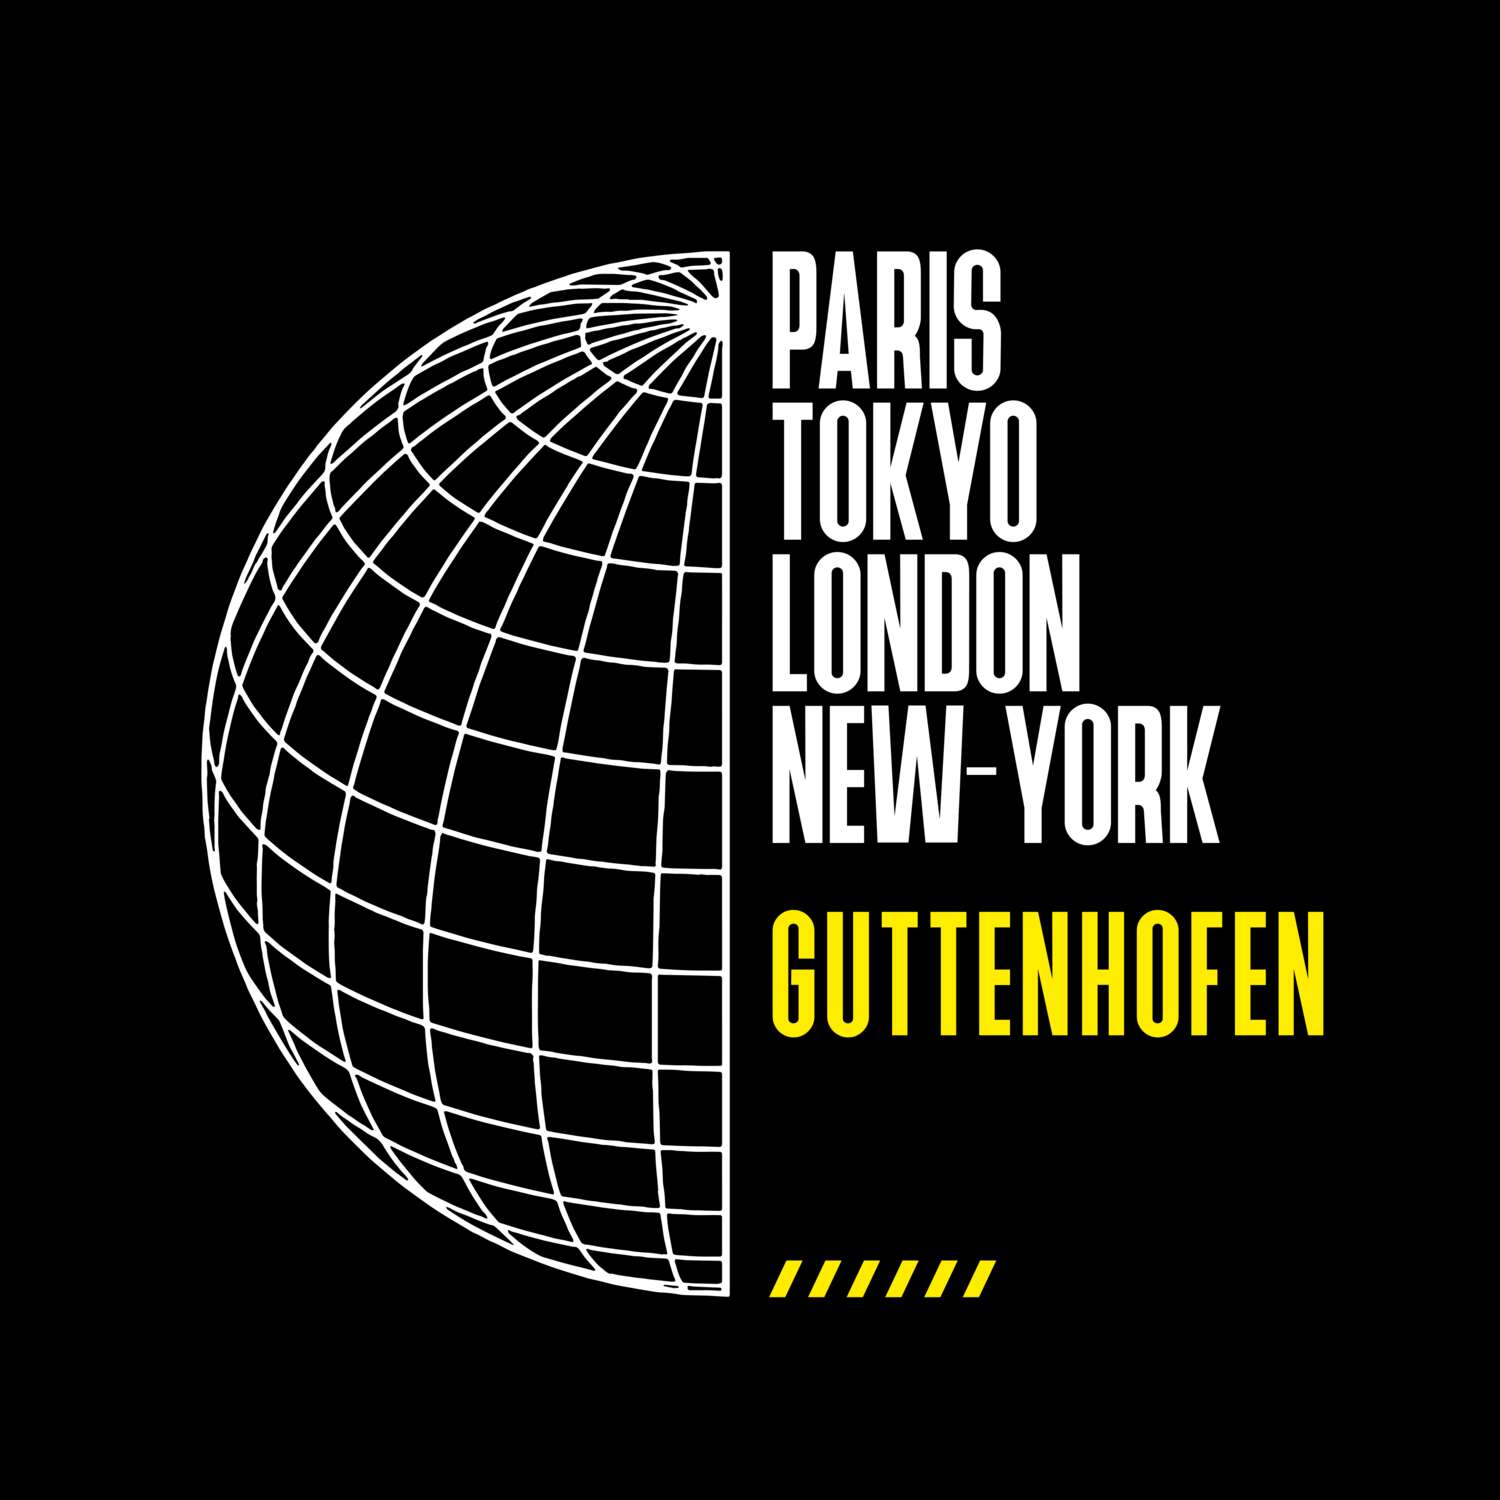 Guttenhofen T-Shirt »Paris Tokyo London«